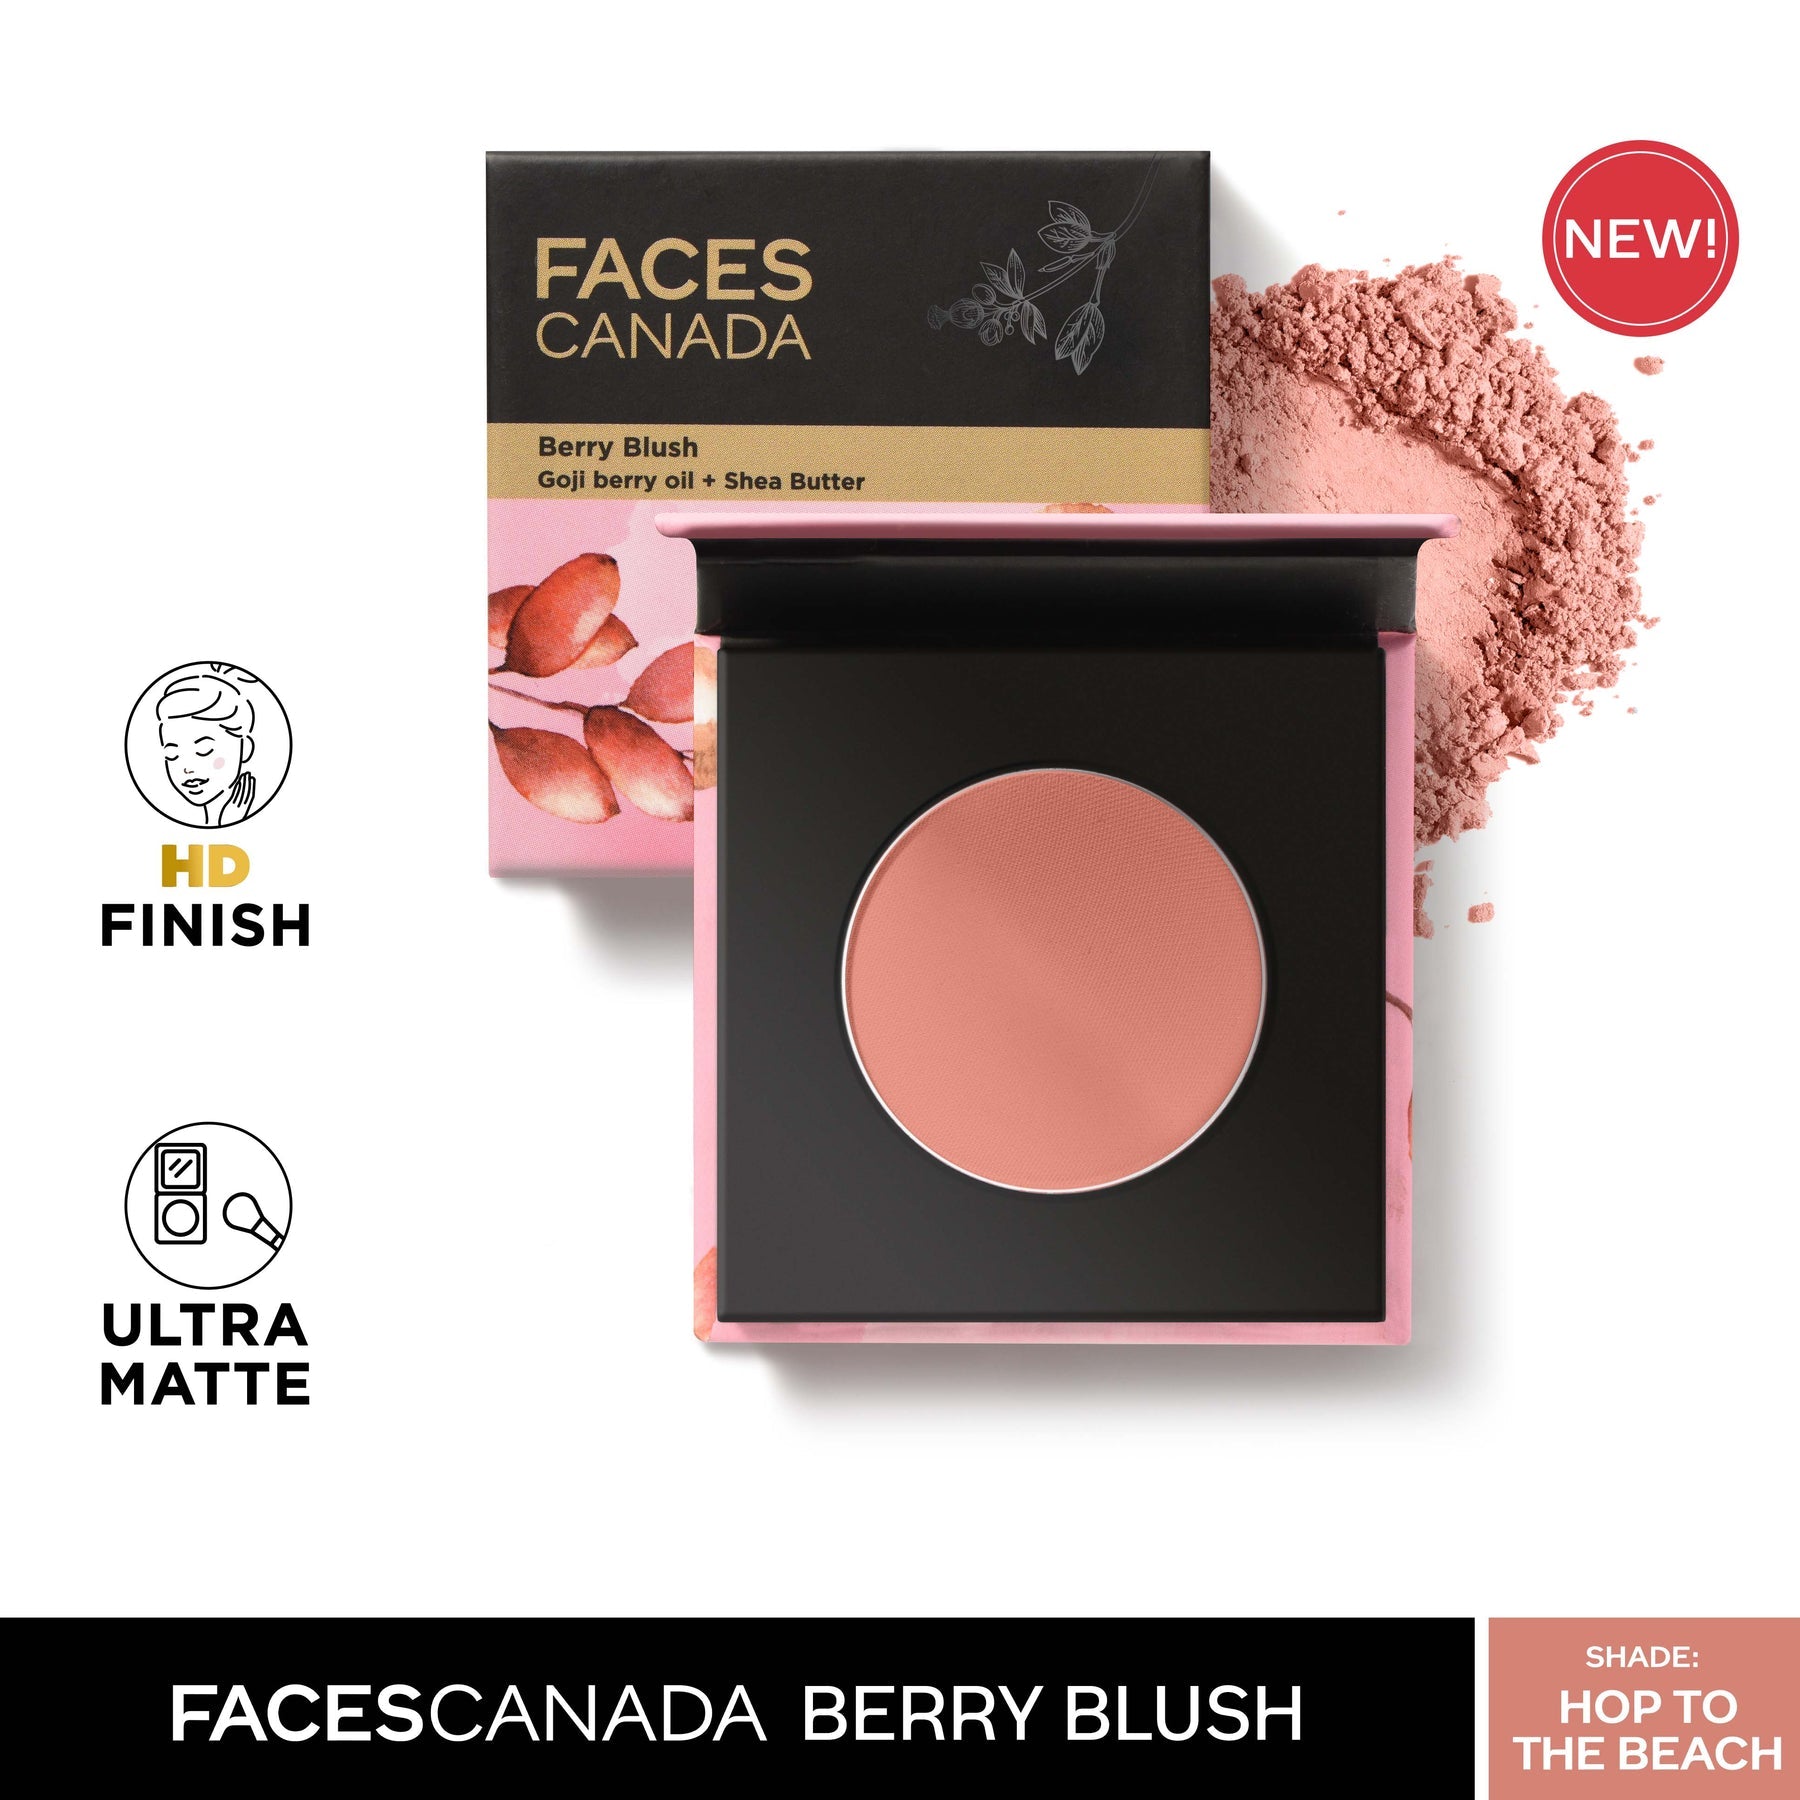 Faces Canada Berry Blush Faces Canada